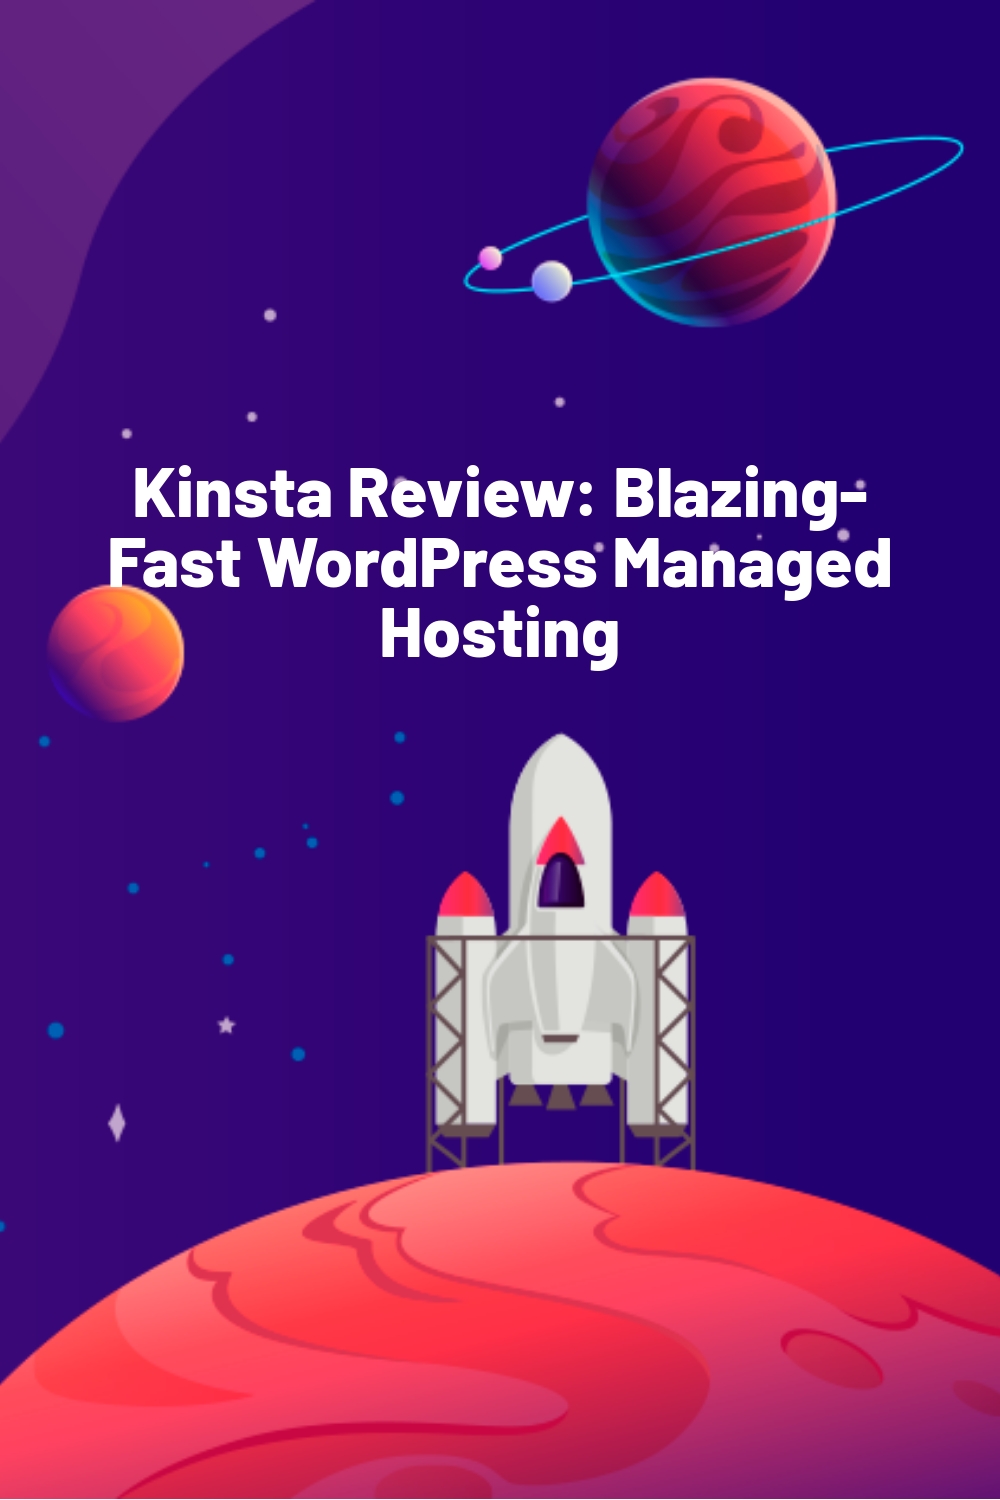 Kinsta Review: Blazing-Fast WordPress Managed Hosting